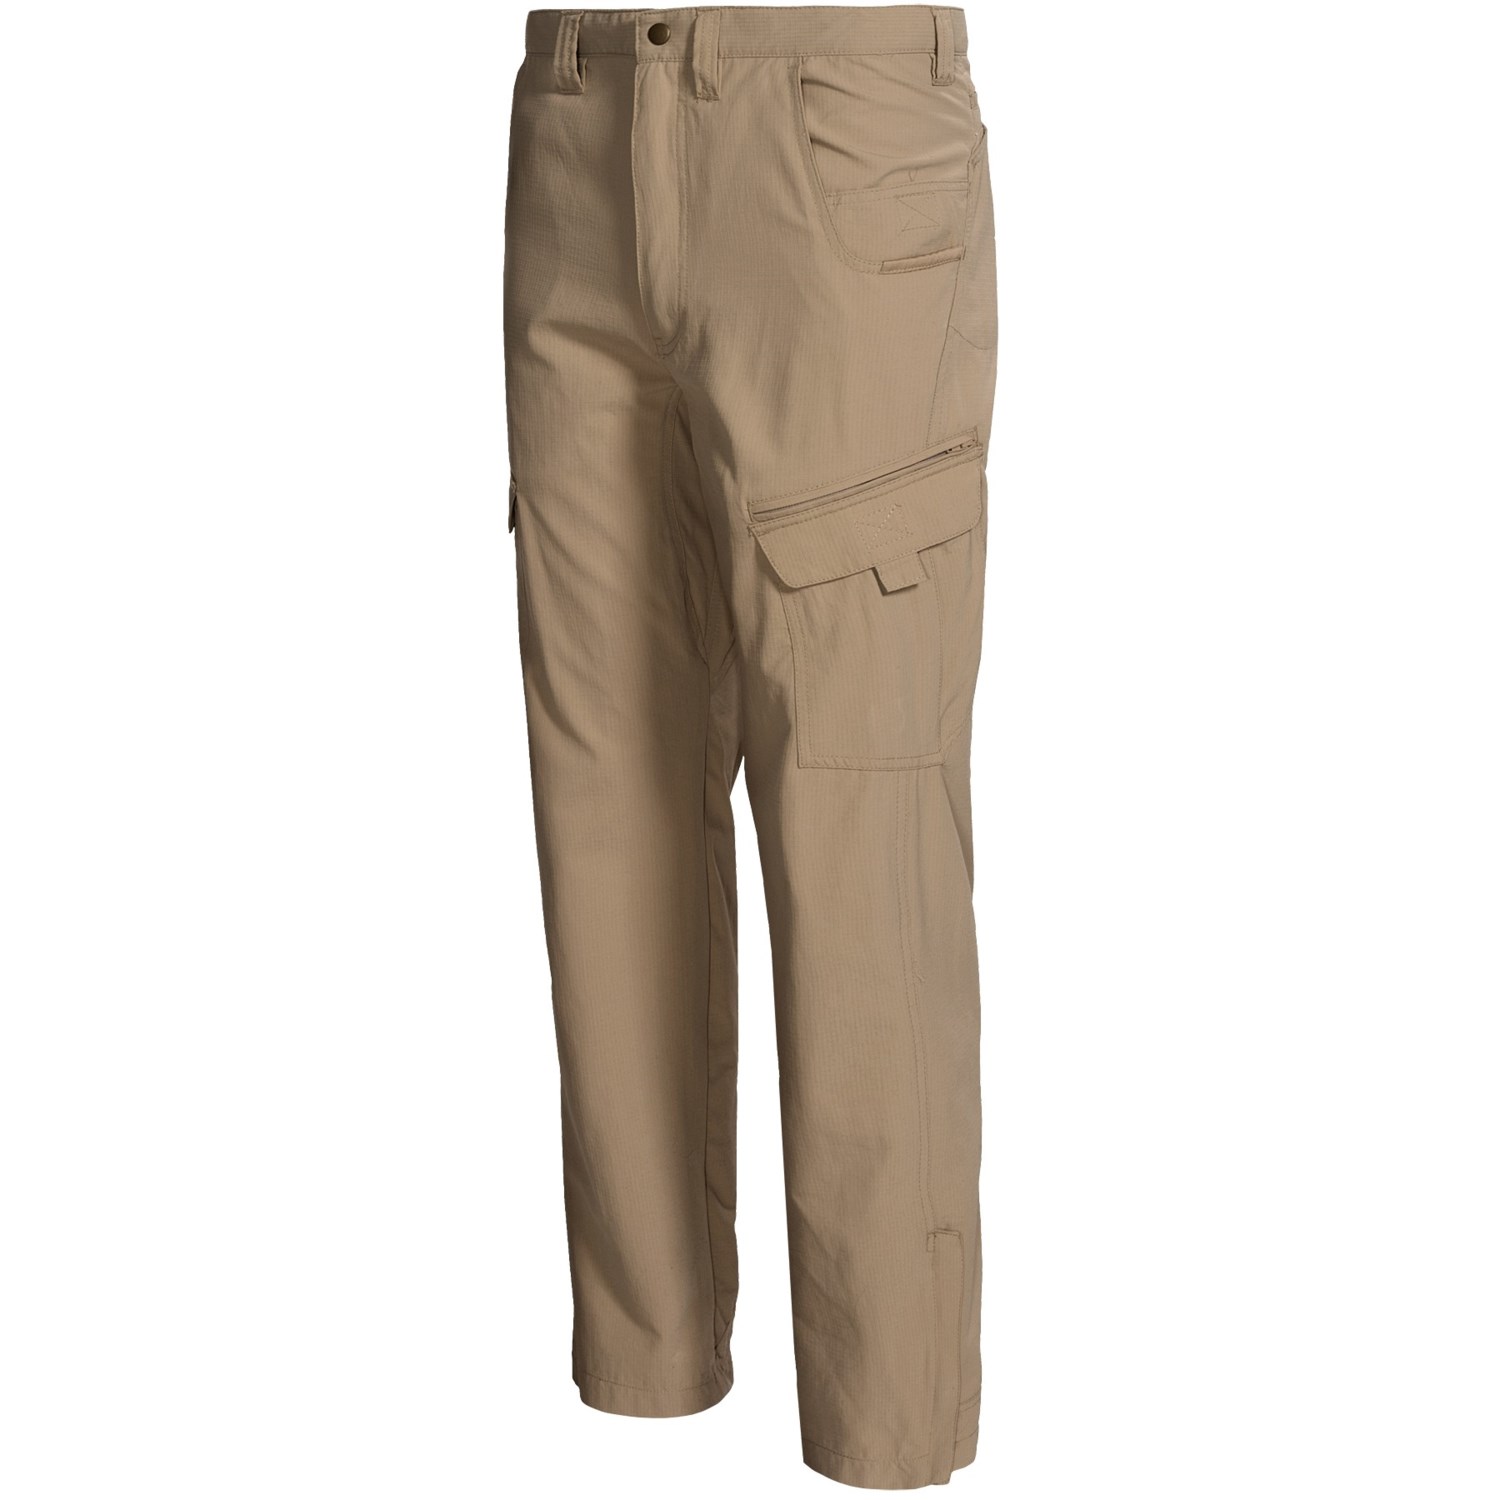 Tactical Pants For Men 57